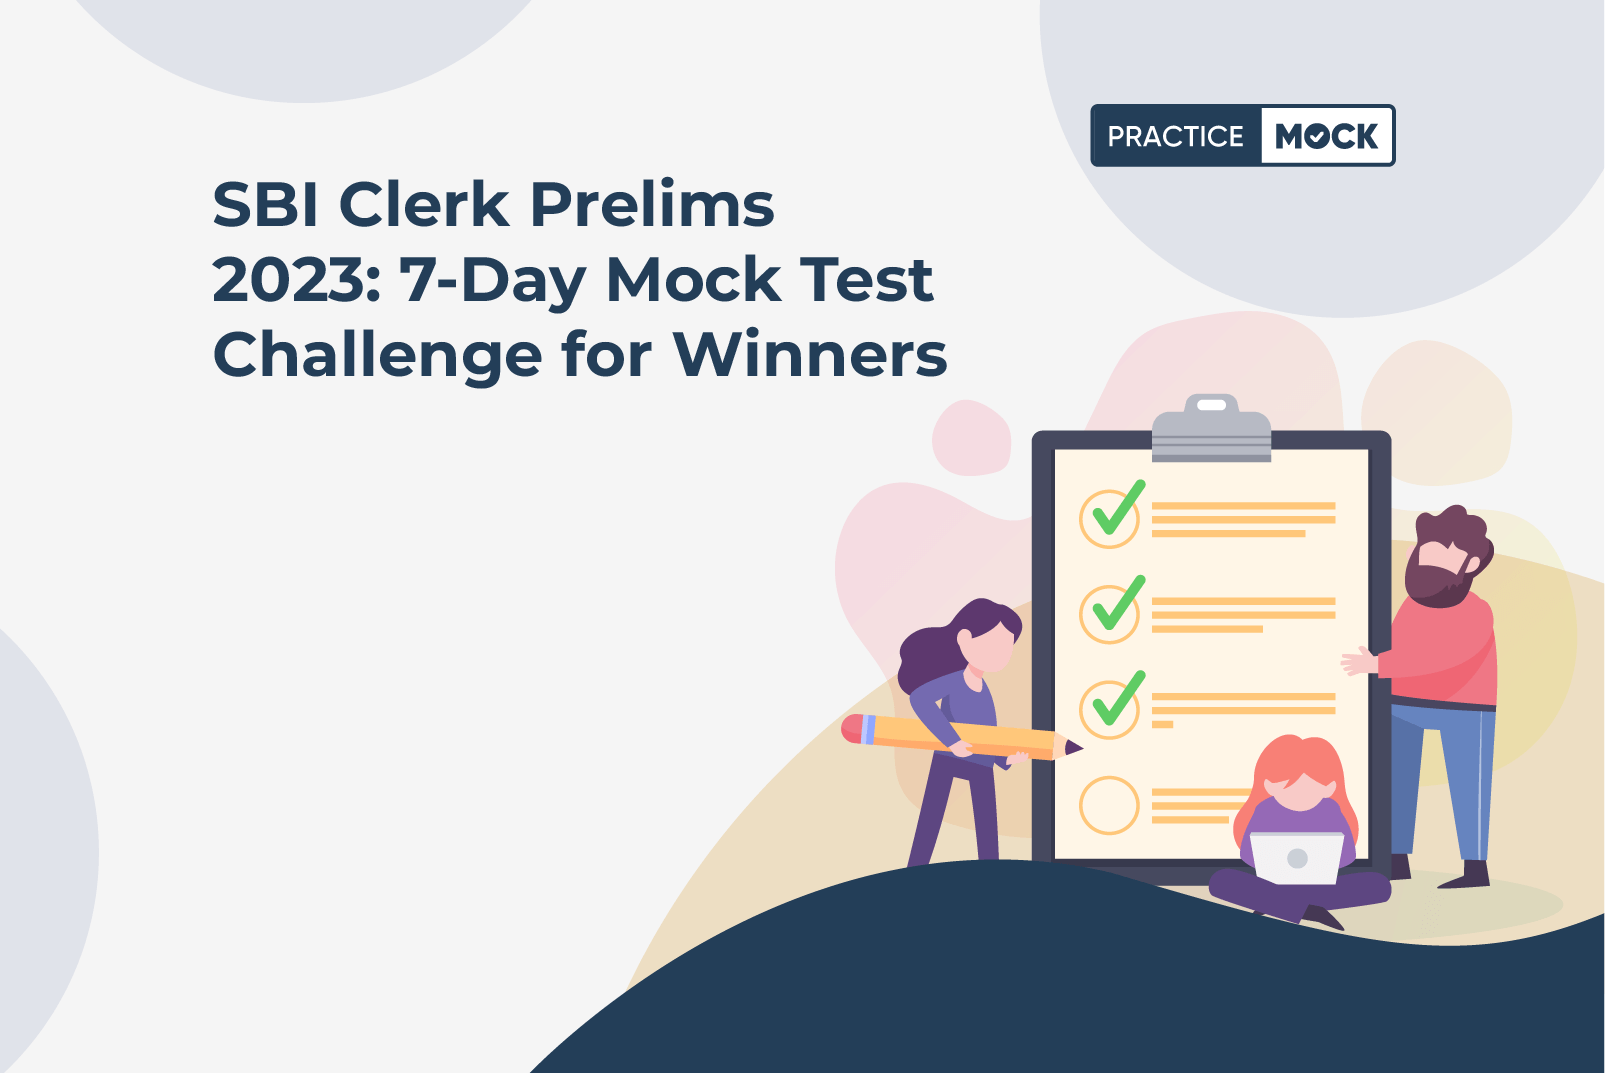 SBI Clerk Prelims 2023: 7-Day Mock Test Challenge for Winners